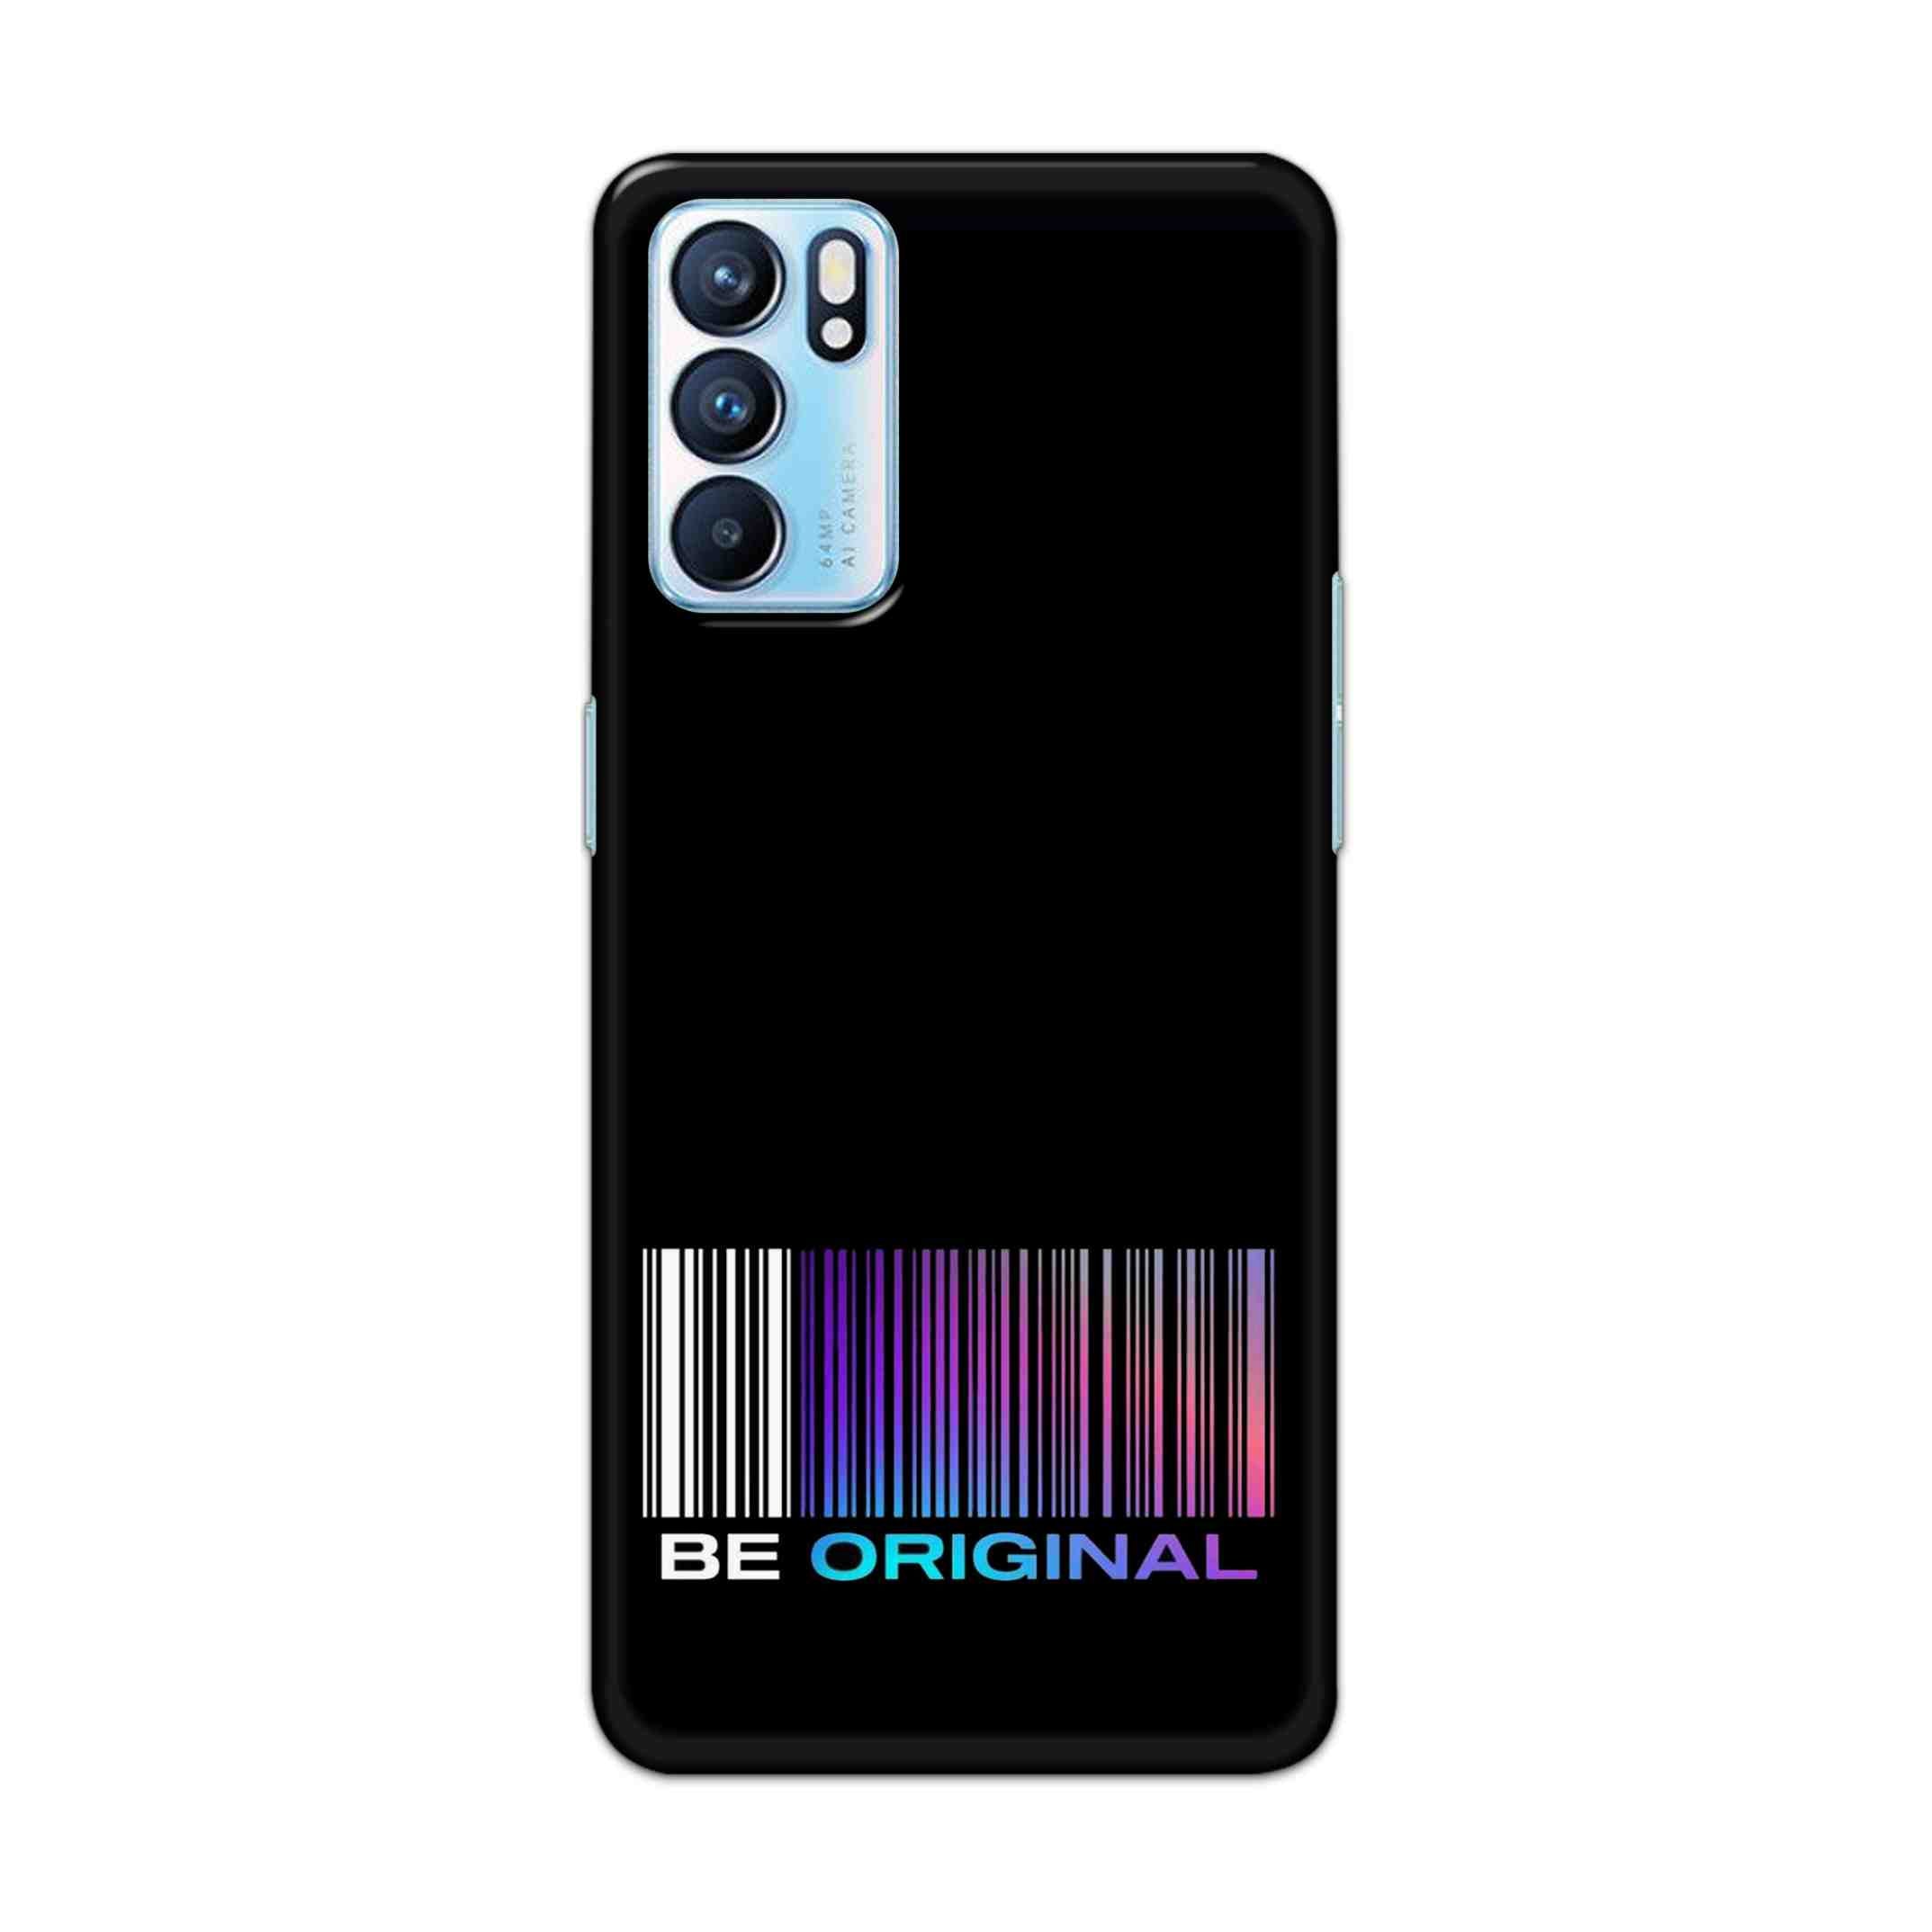 Buy Be Original Hard Back Mobile Phone Case Cover For OPPO RENO 6 Online